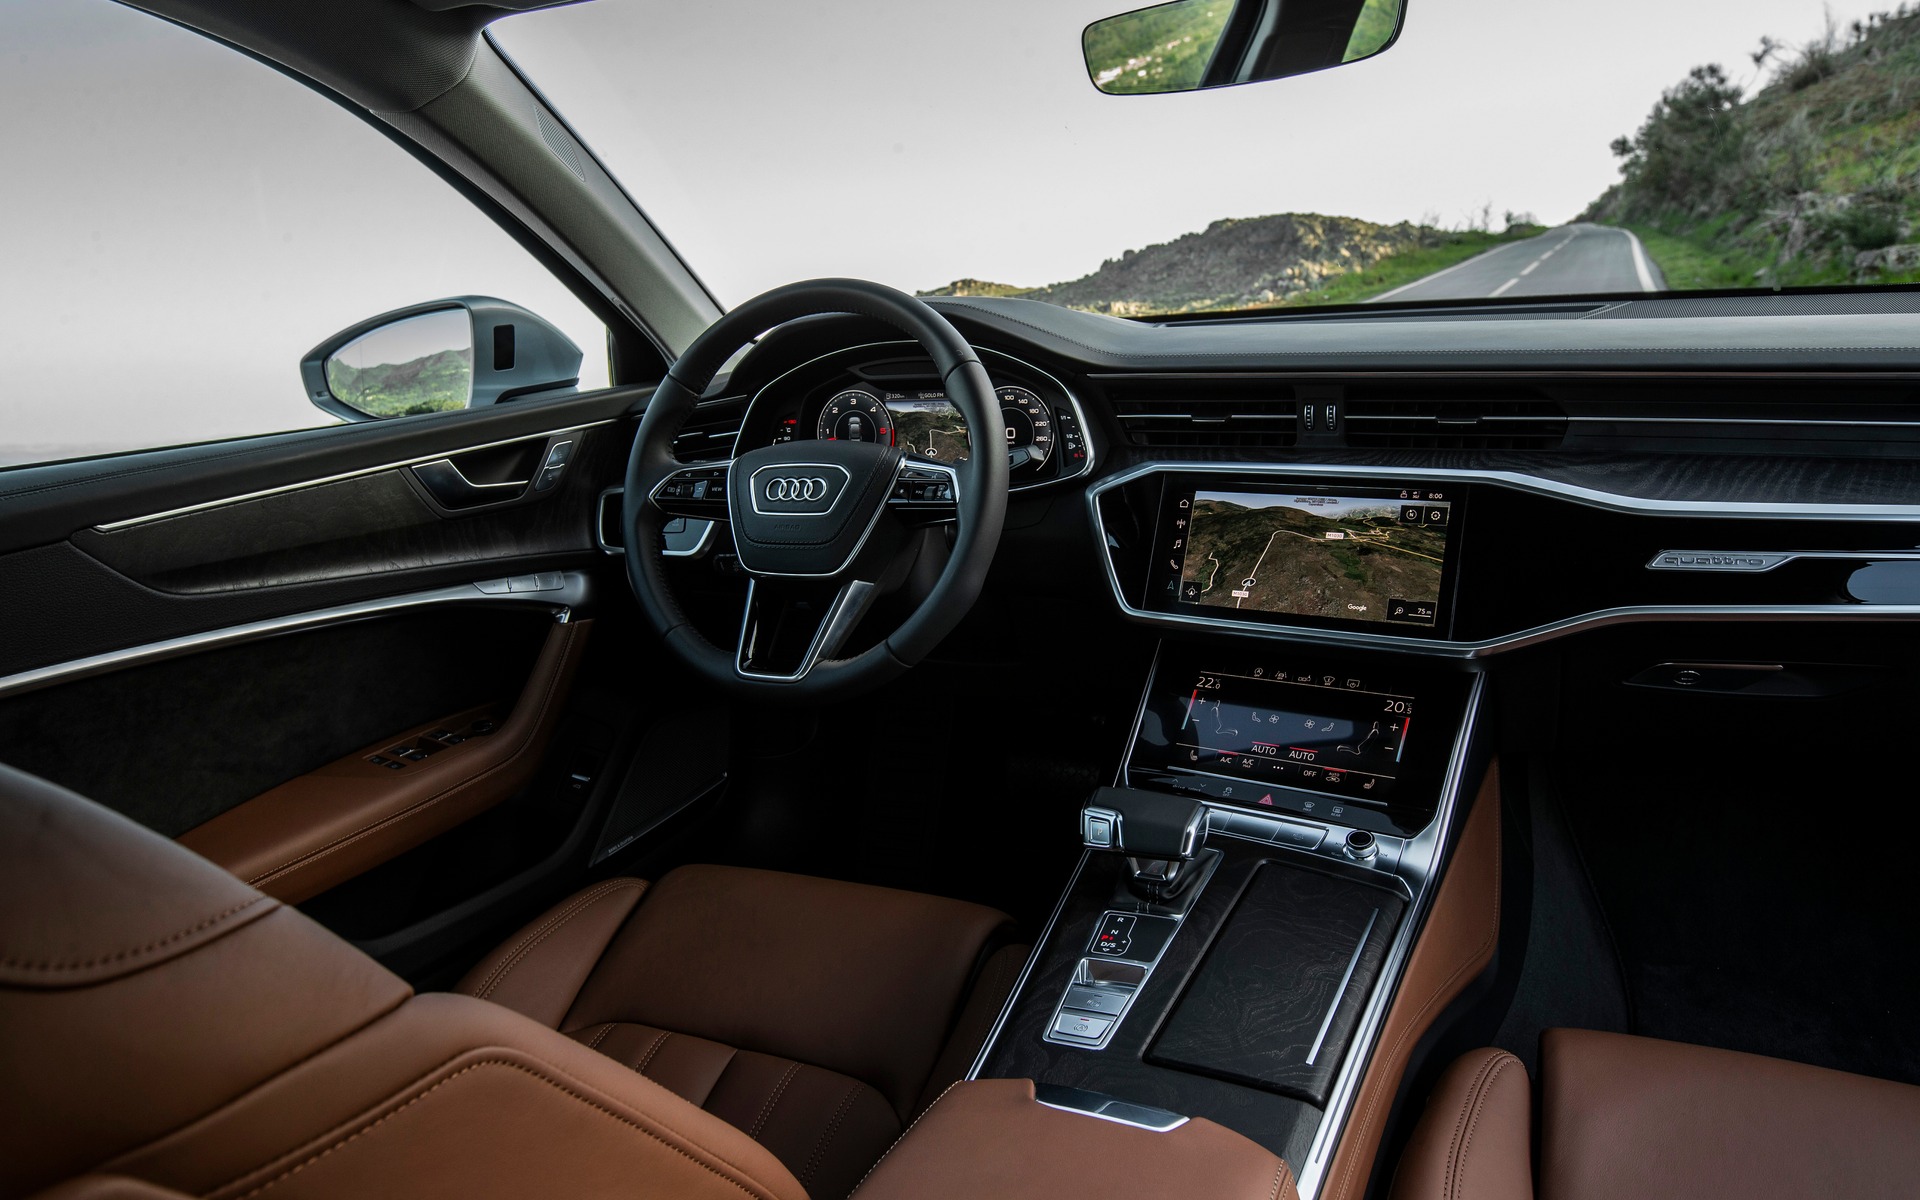 Bezit Word gek Talloos 2019 Audi A6: Do-it-all Luxury Sedan - The Car Guide